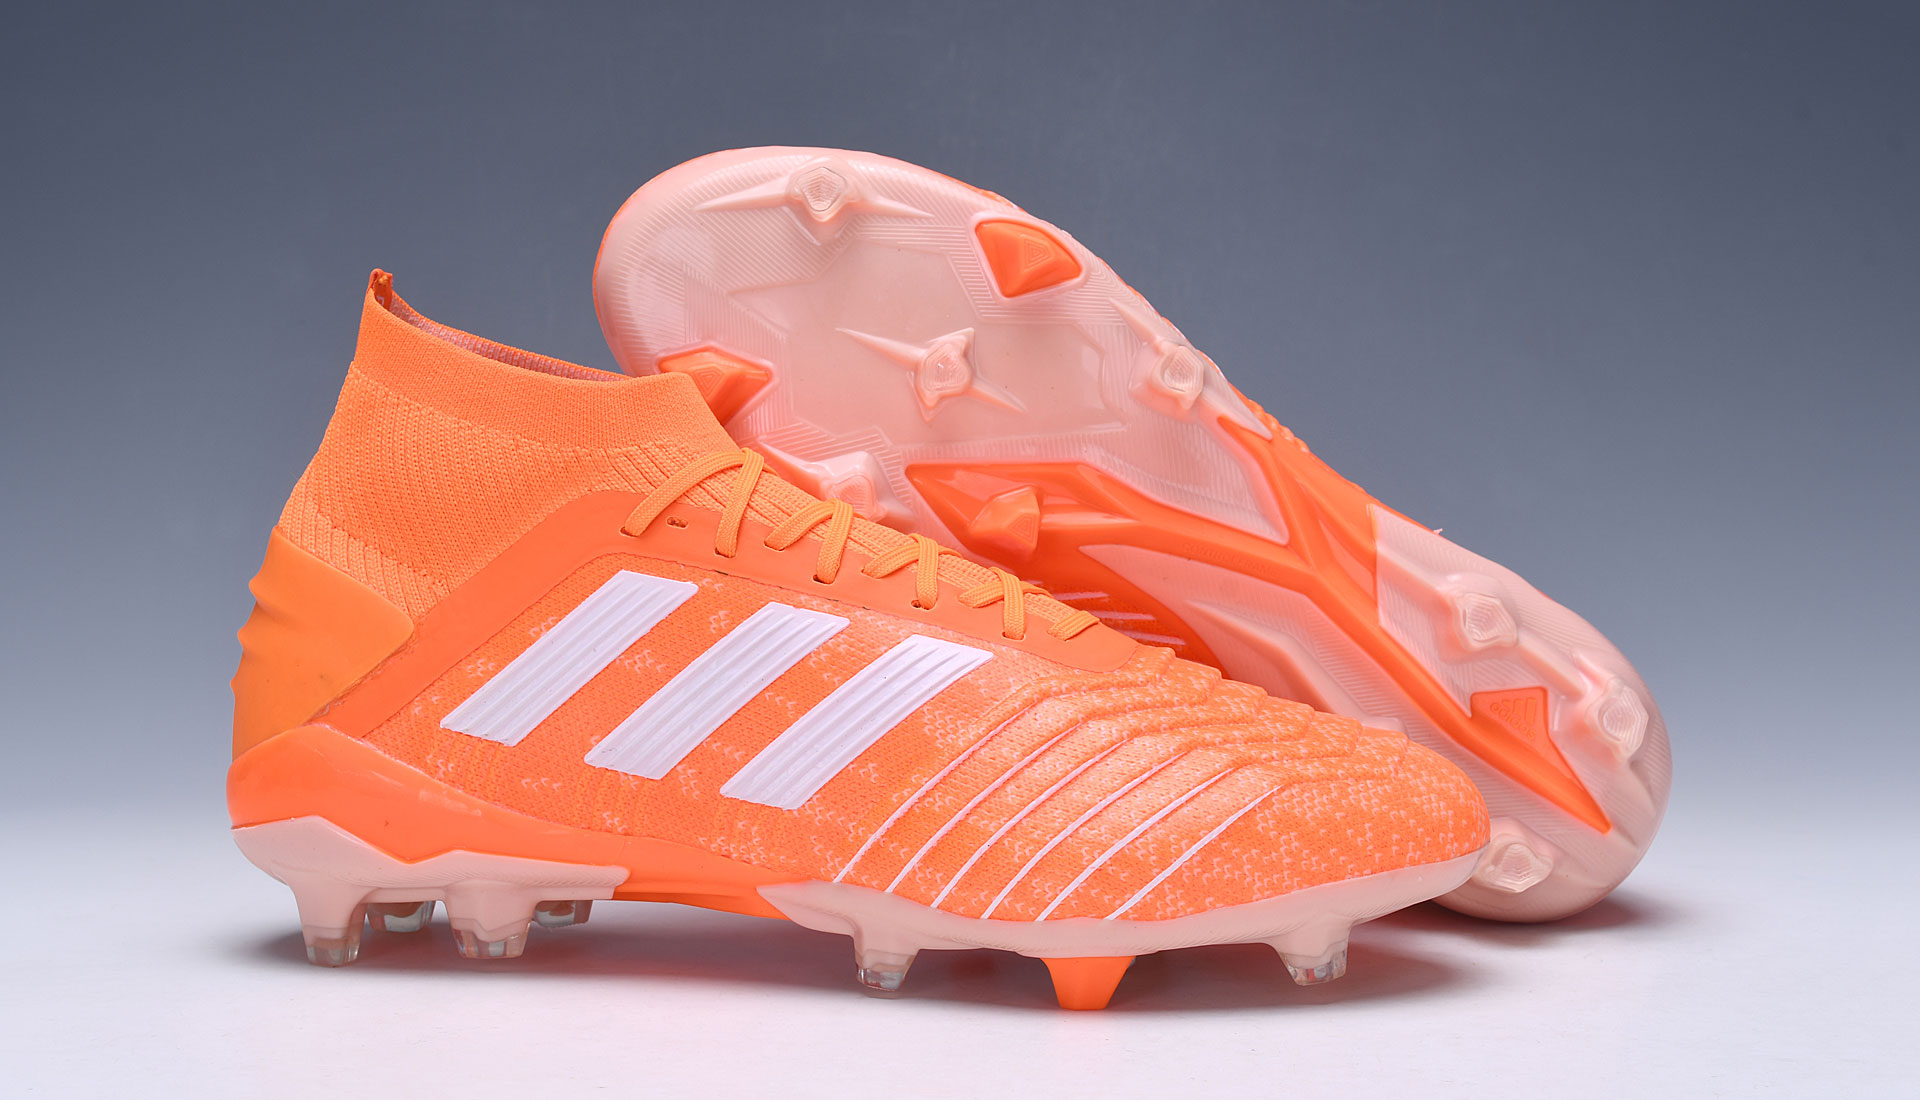 Adidas PREDATOR 19.1 FG W Orange G25820 - Women's Soccer Shoe